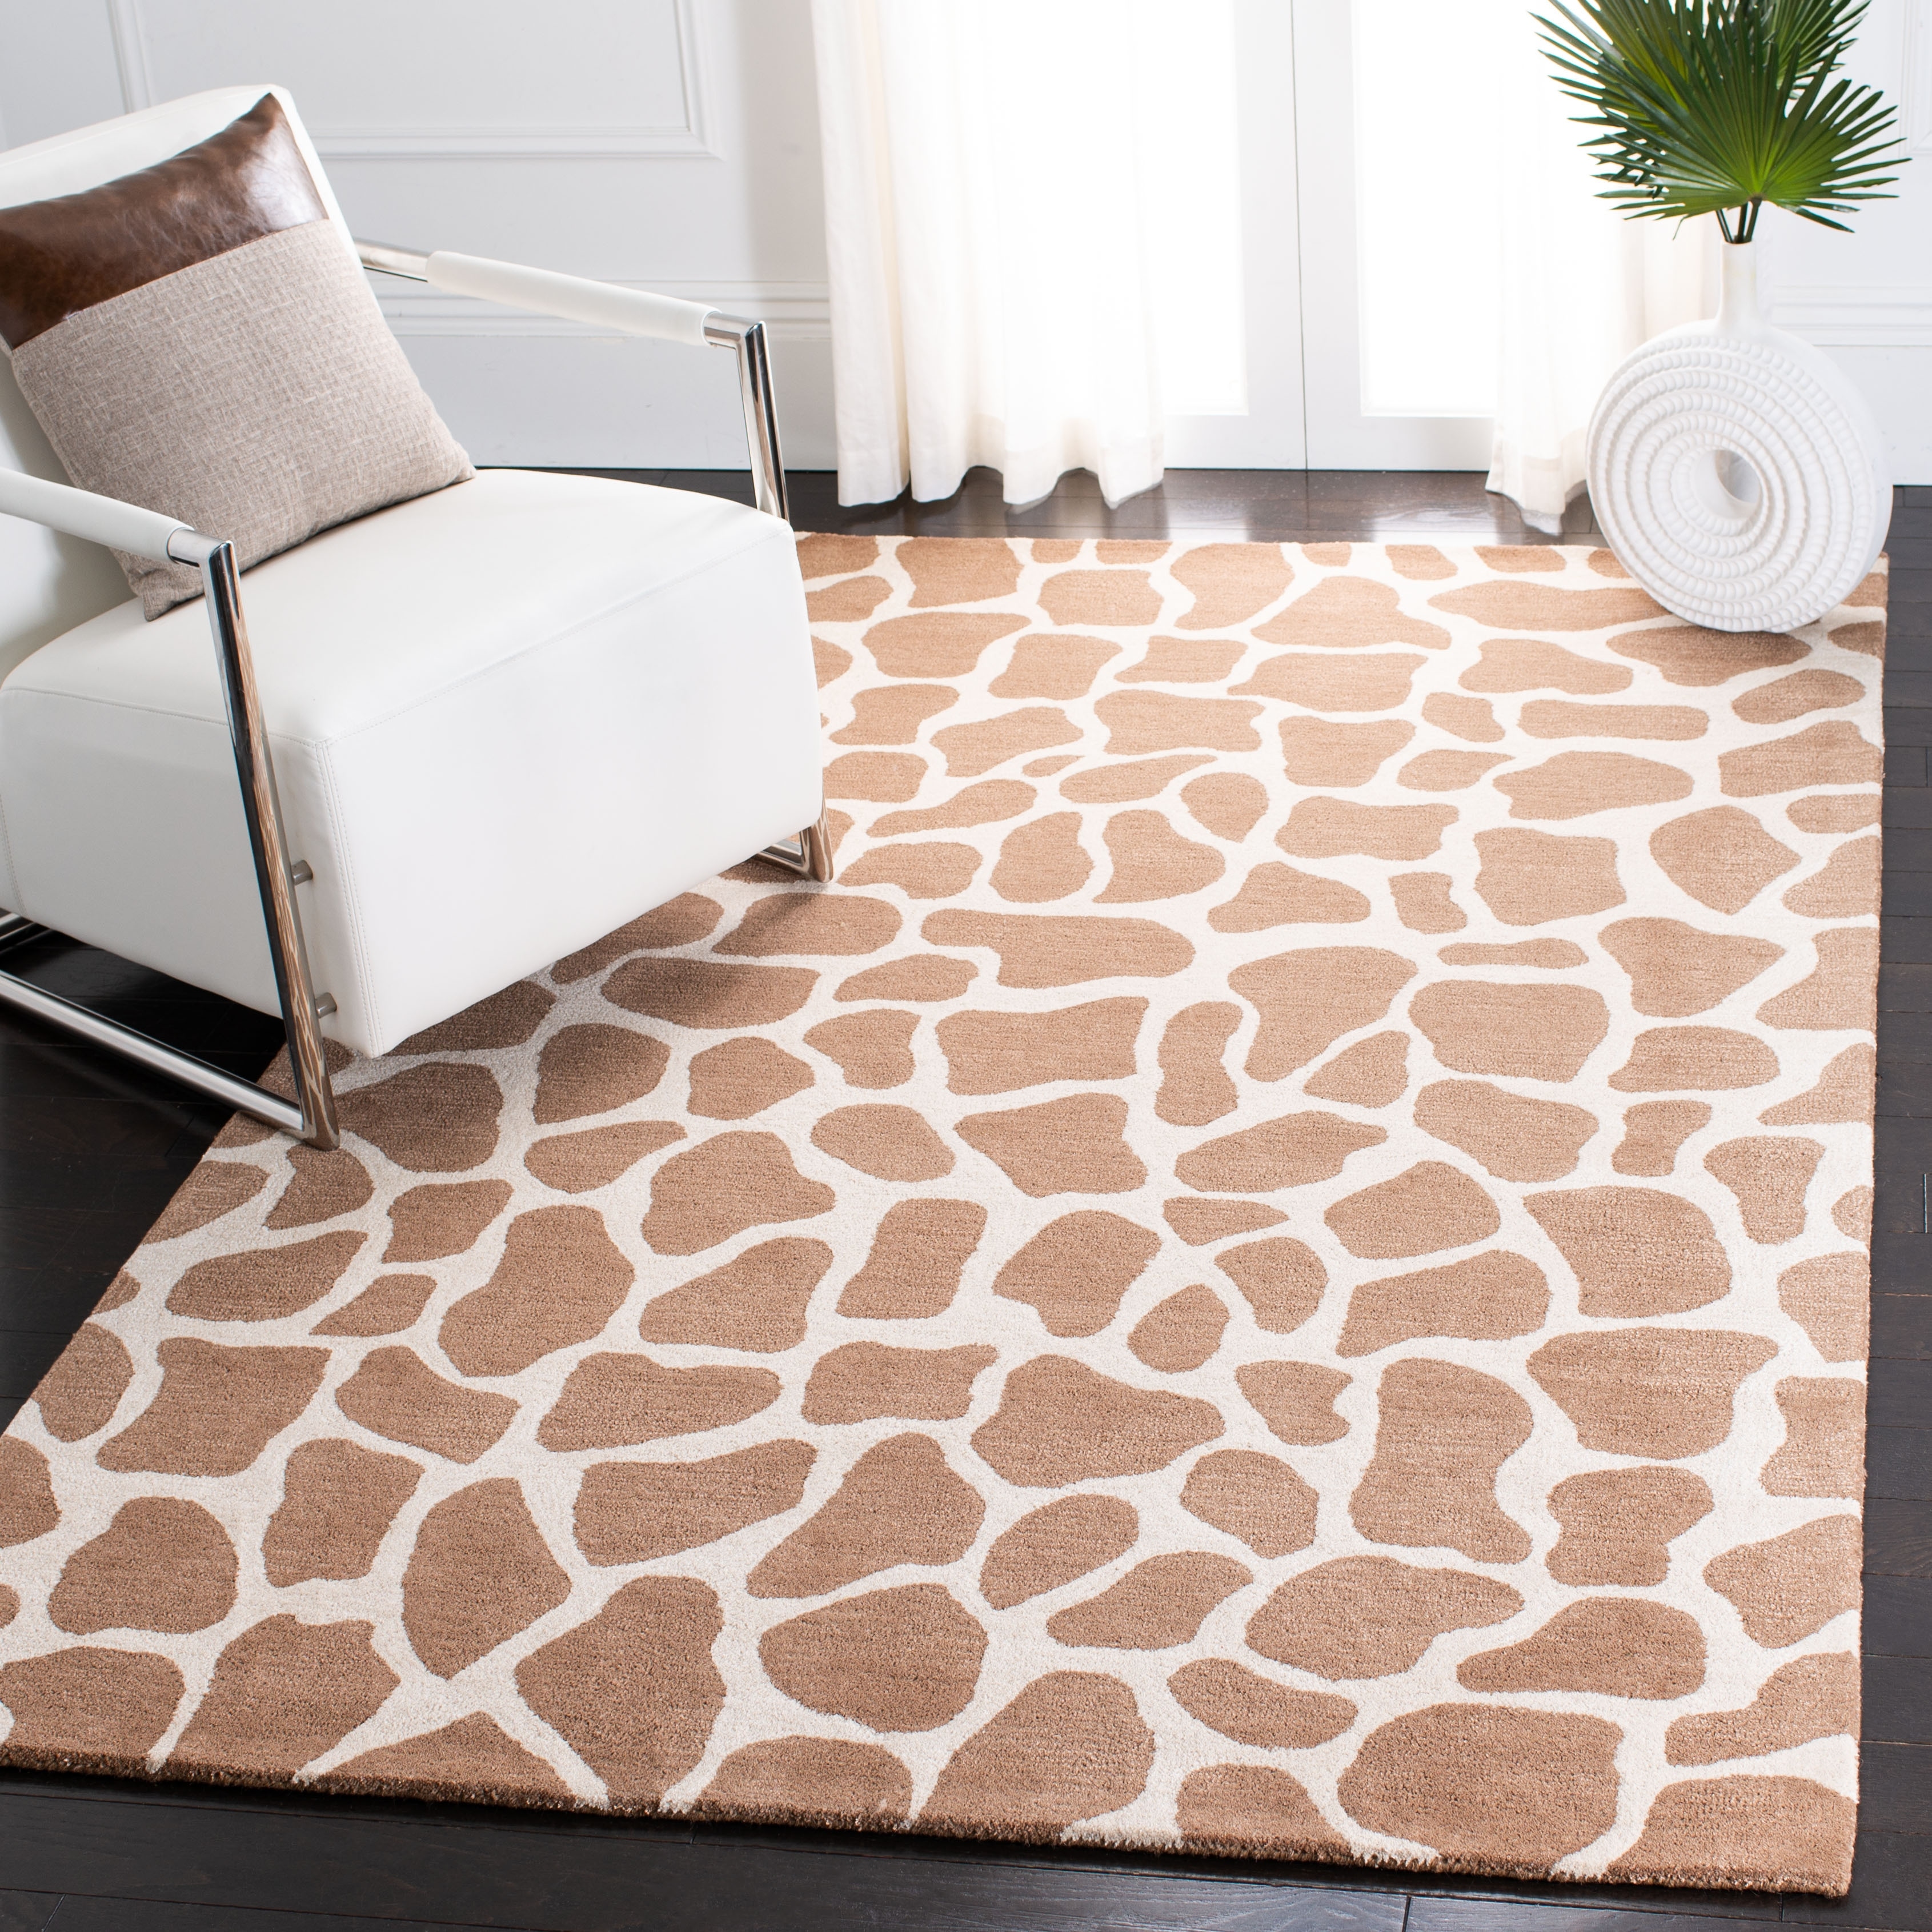 Fabric Giraffe Pattern Rug Small Animal Pattern Carpet Mat